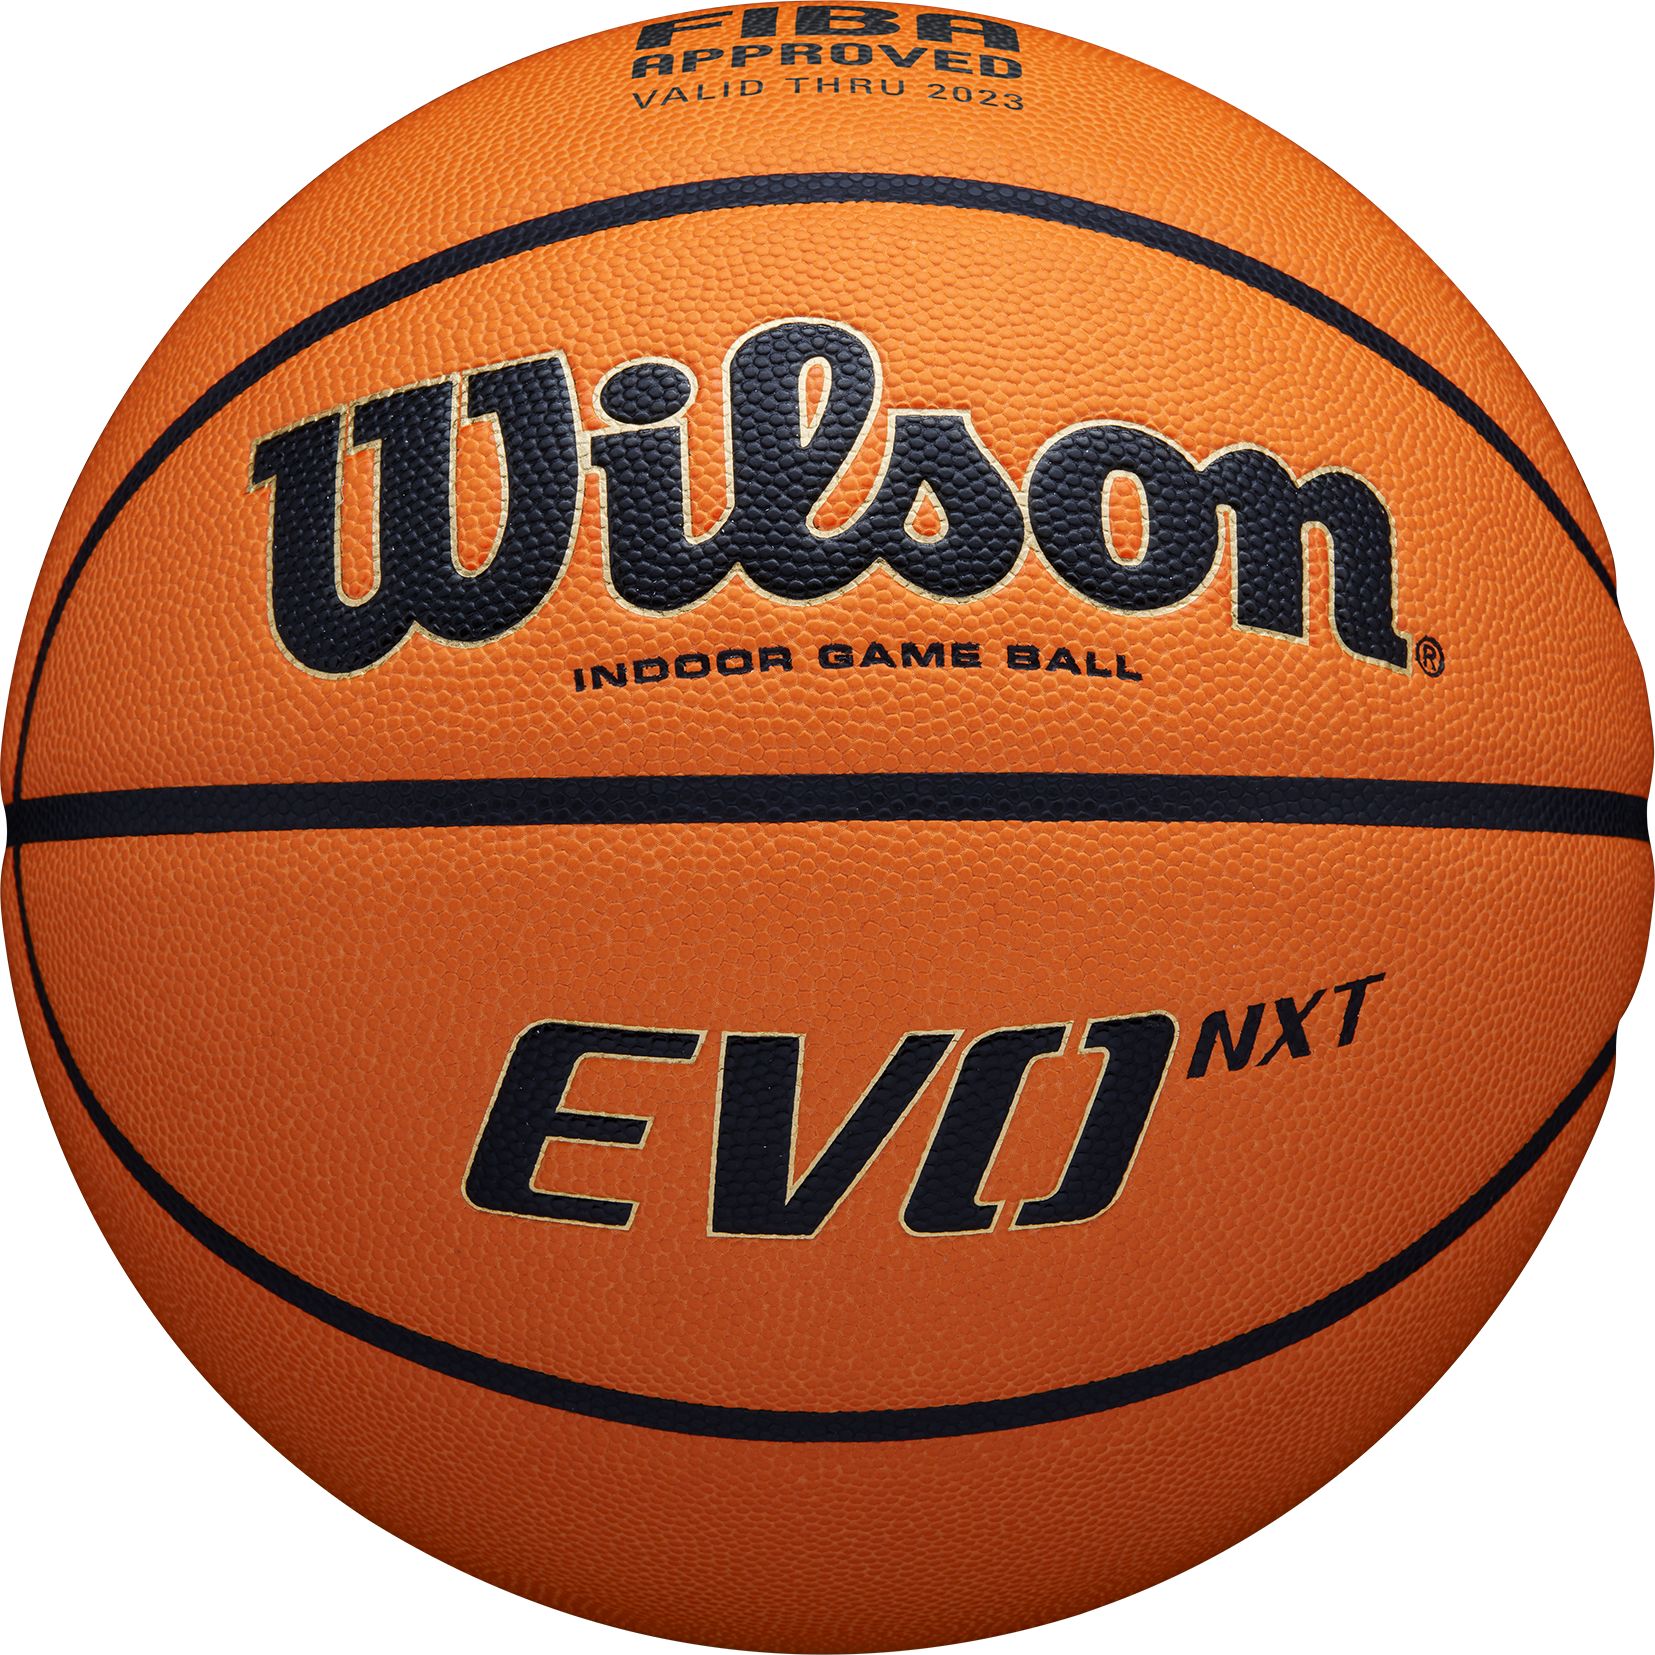 WILSON, EVO NXT FIBA GAME BALL 7